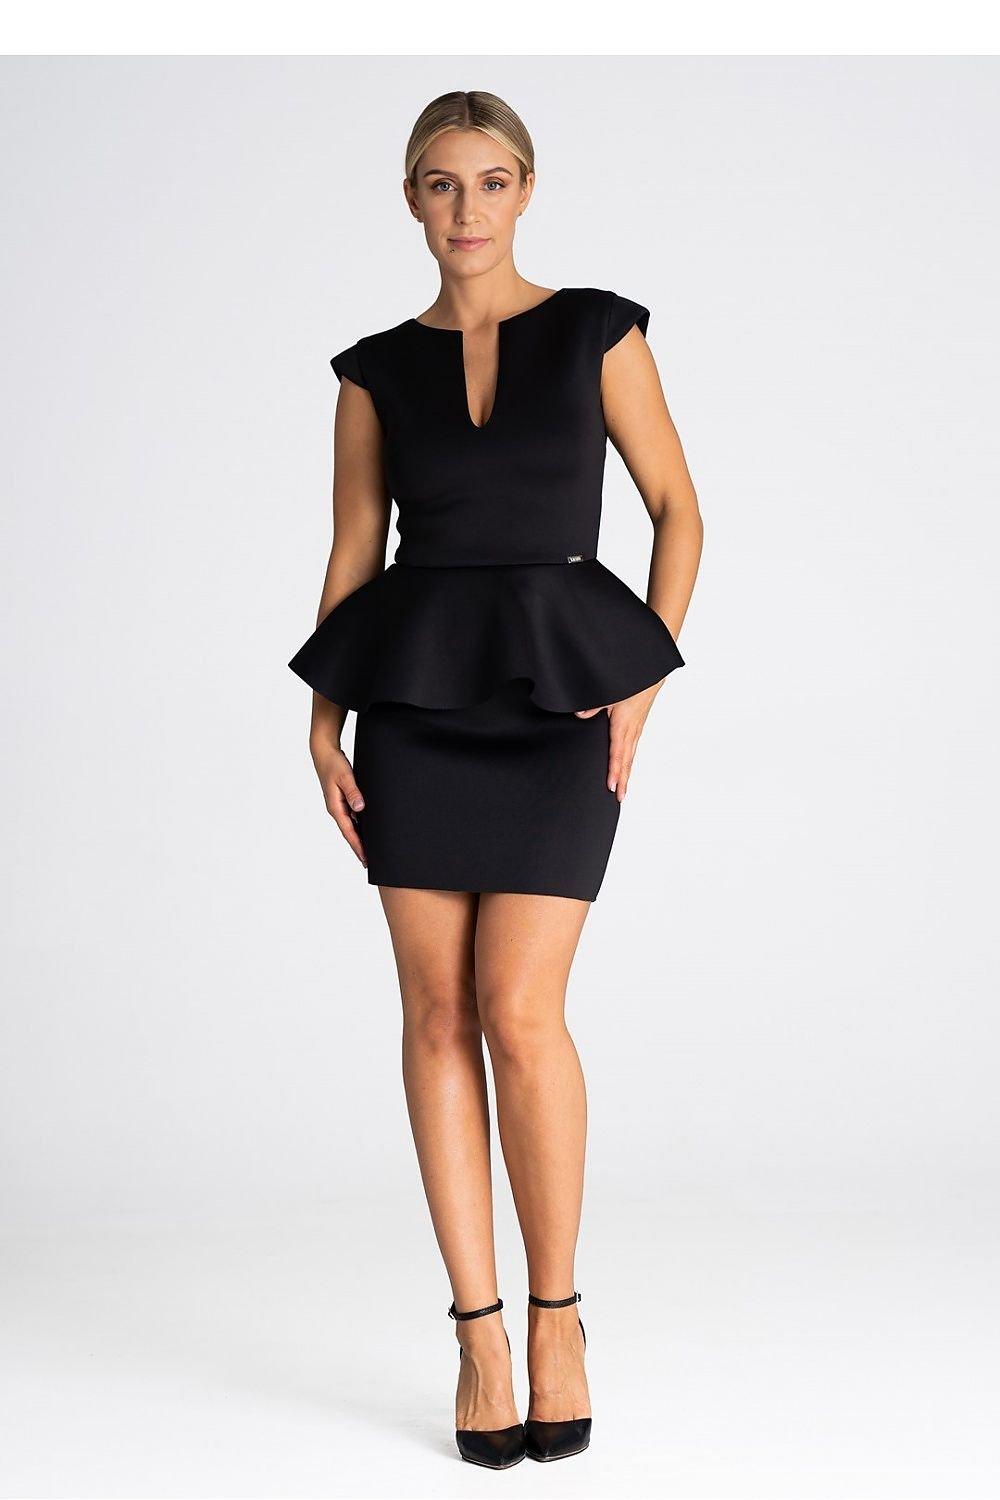 Dress Sukienka Model M975 Black - Figl - Lucianne Boutique